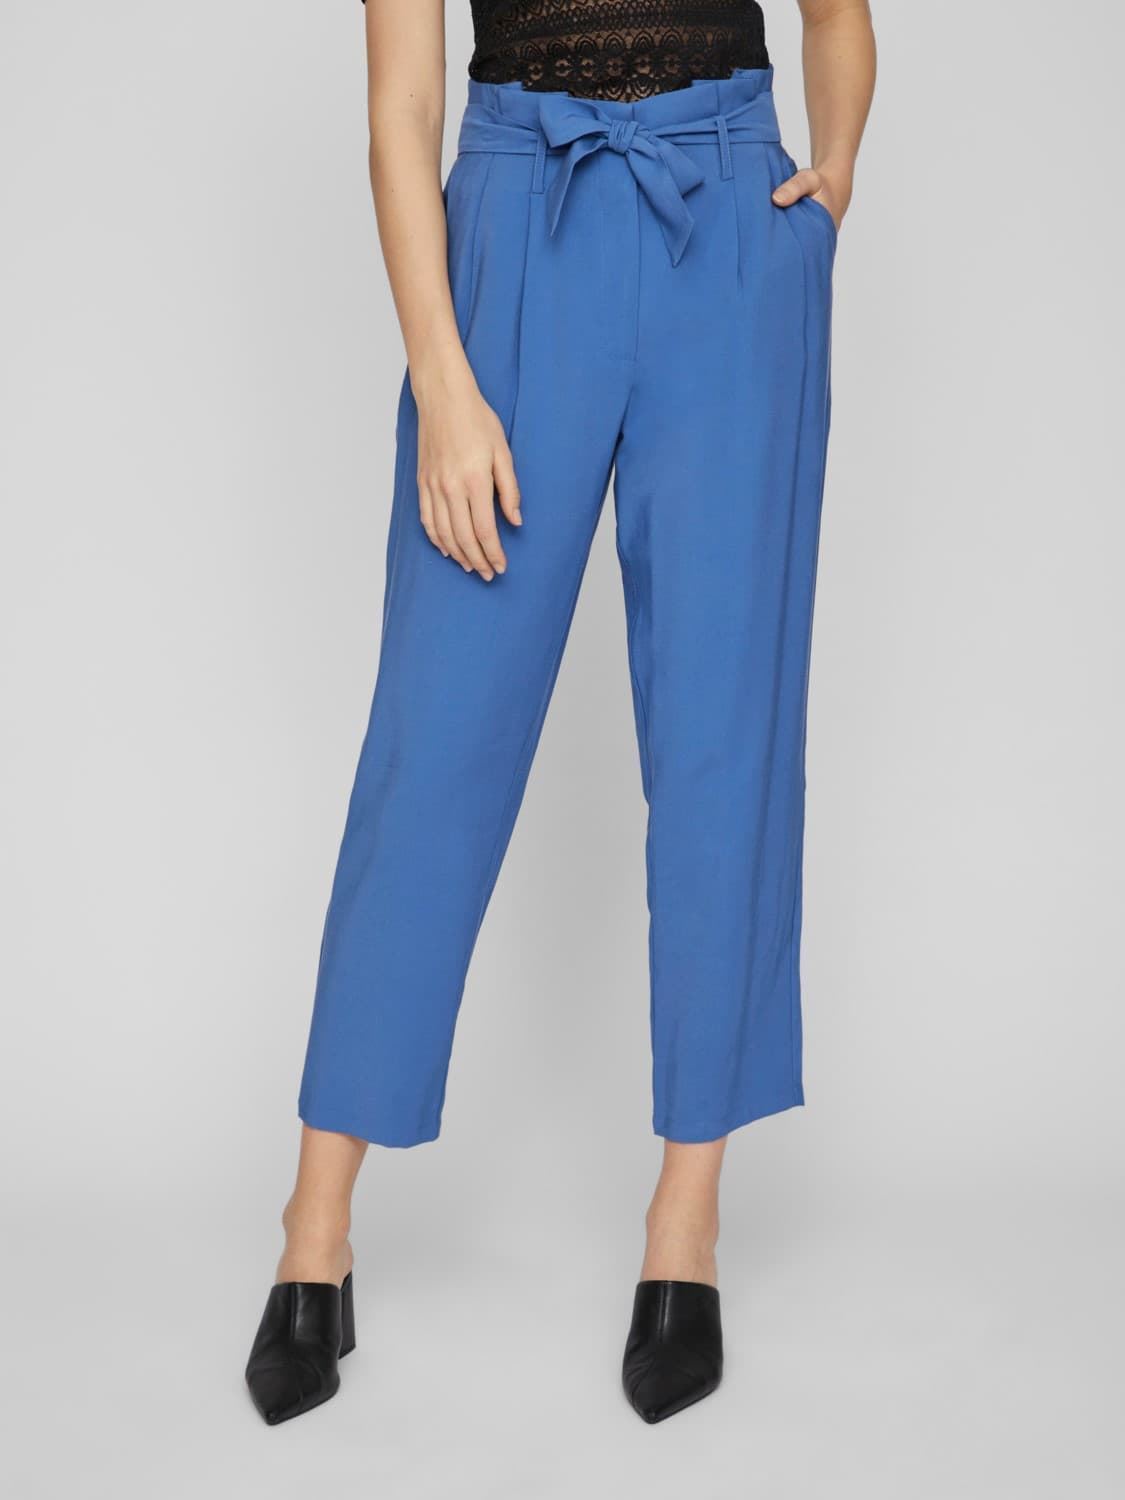 Pantalón azul vikaya - Imagen 5